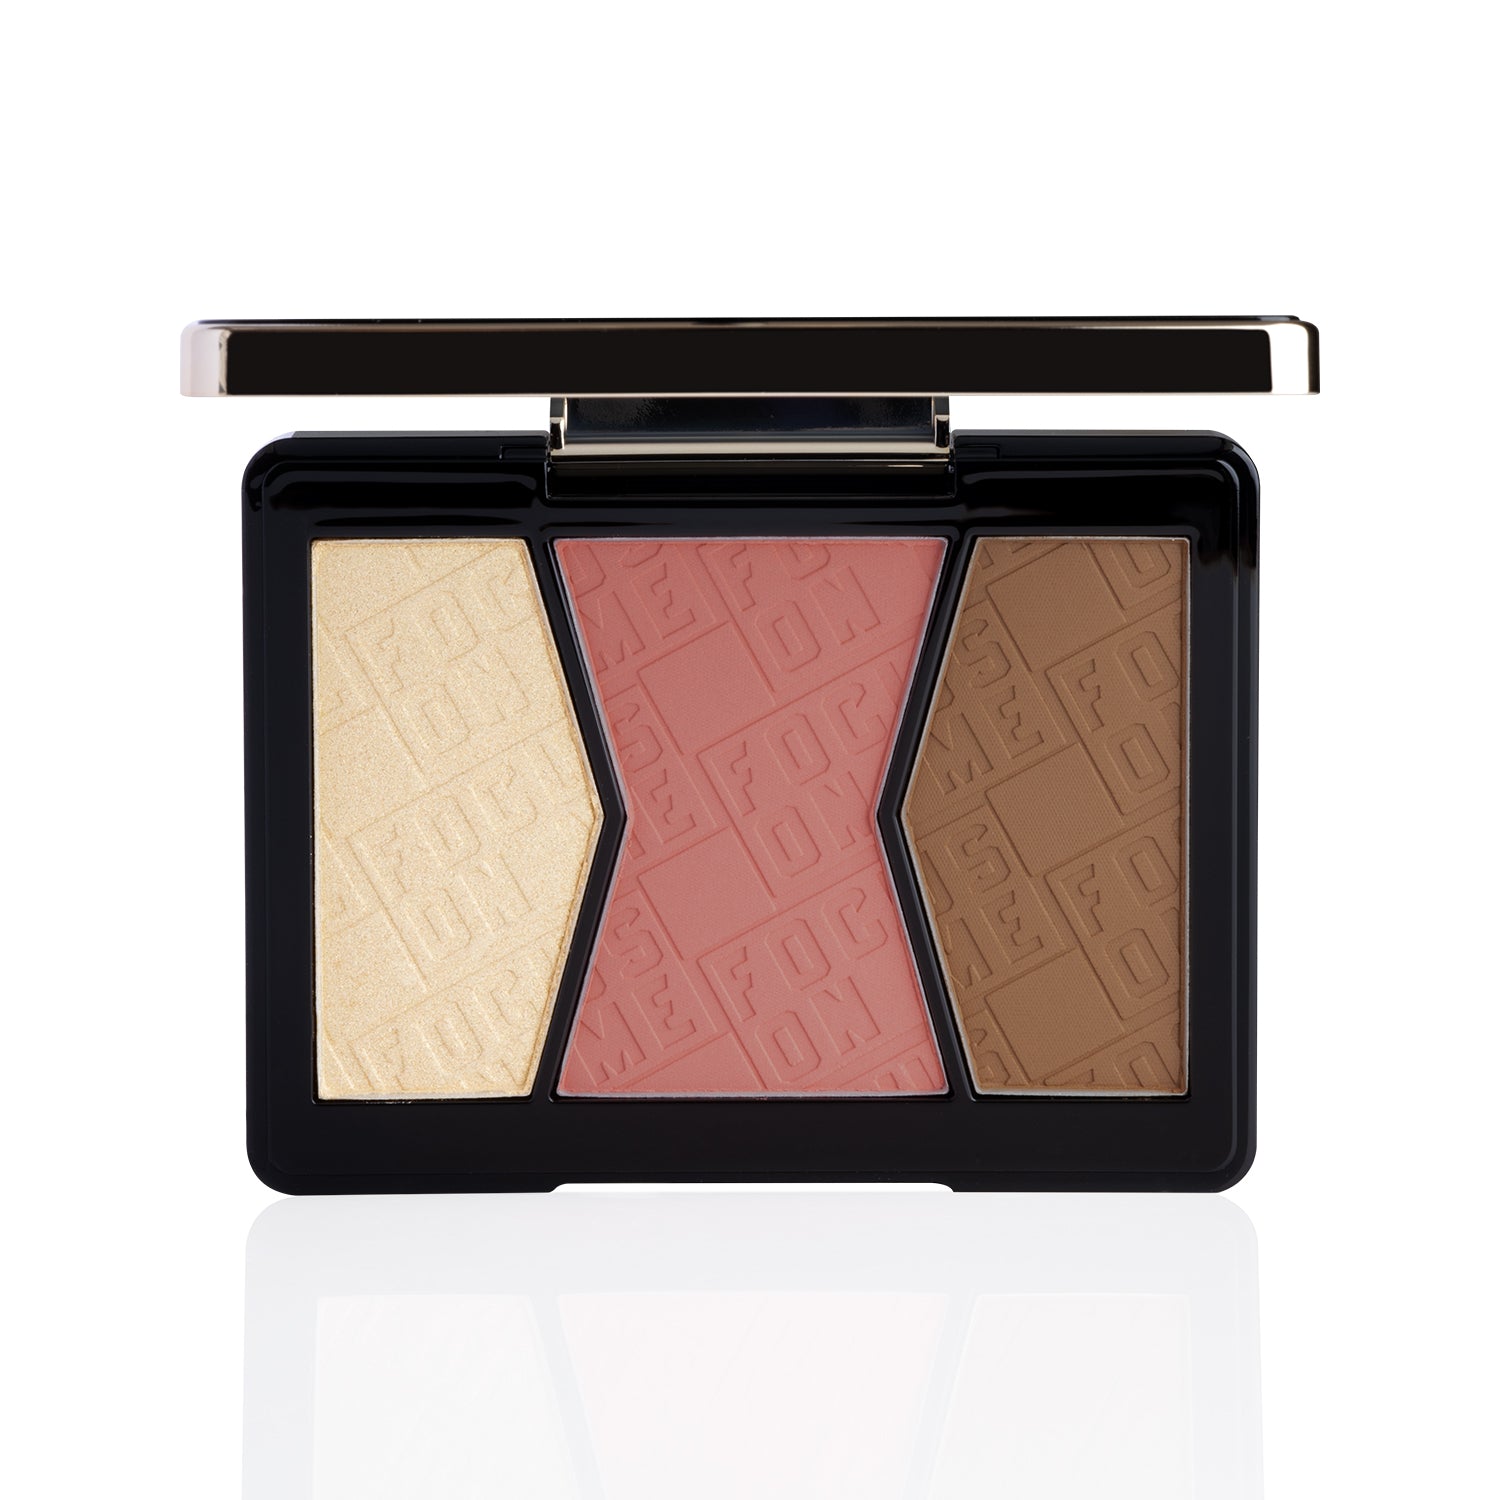 PAC Cosmetics Focus On Me Blush & Highlight X3 (14.5 gm) #Color_Dark